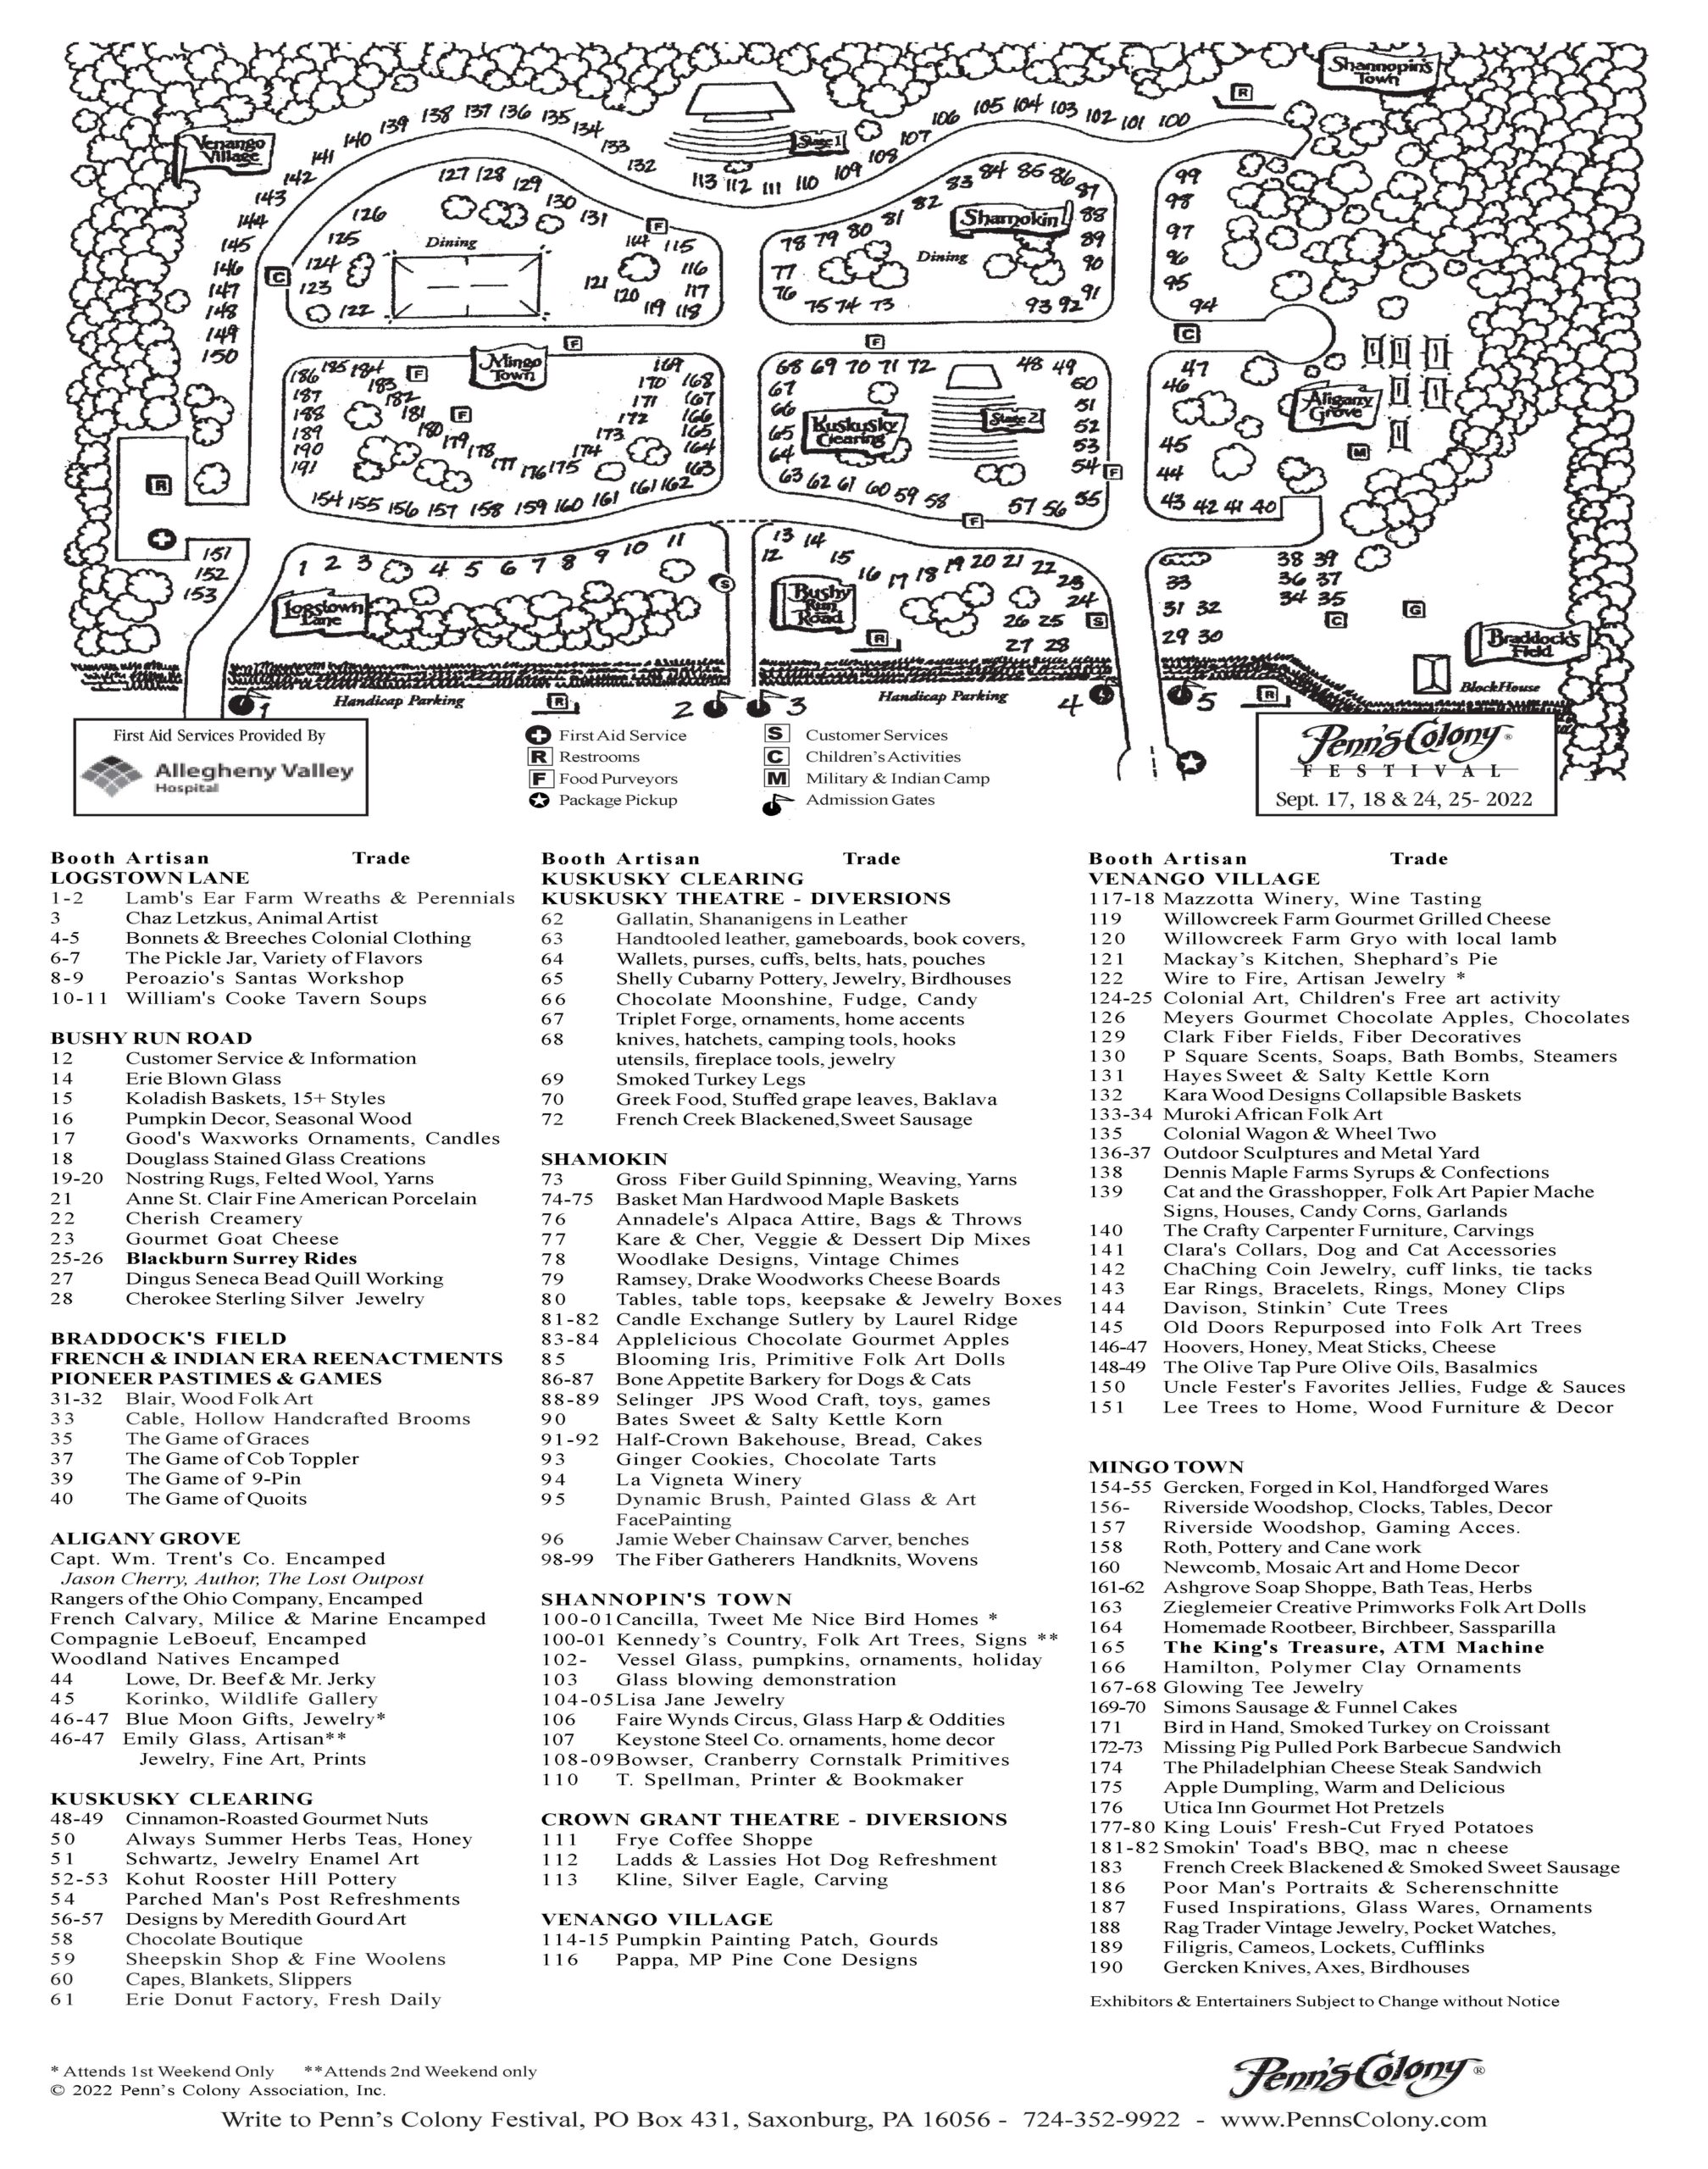 2022 Penn's Colony Festival Exhibitors Map